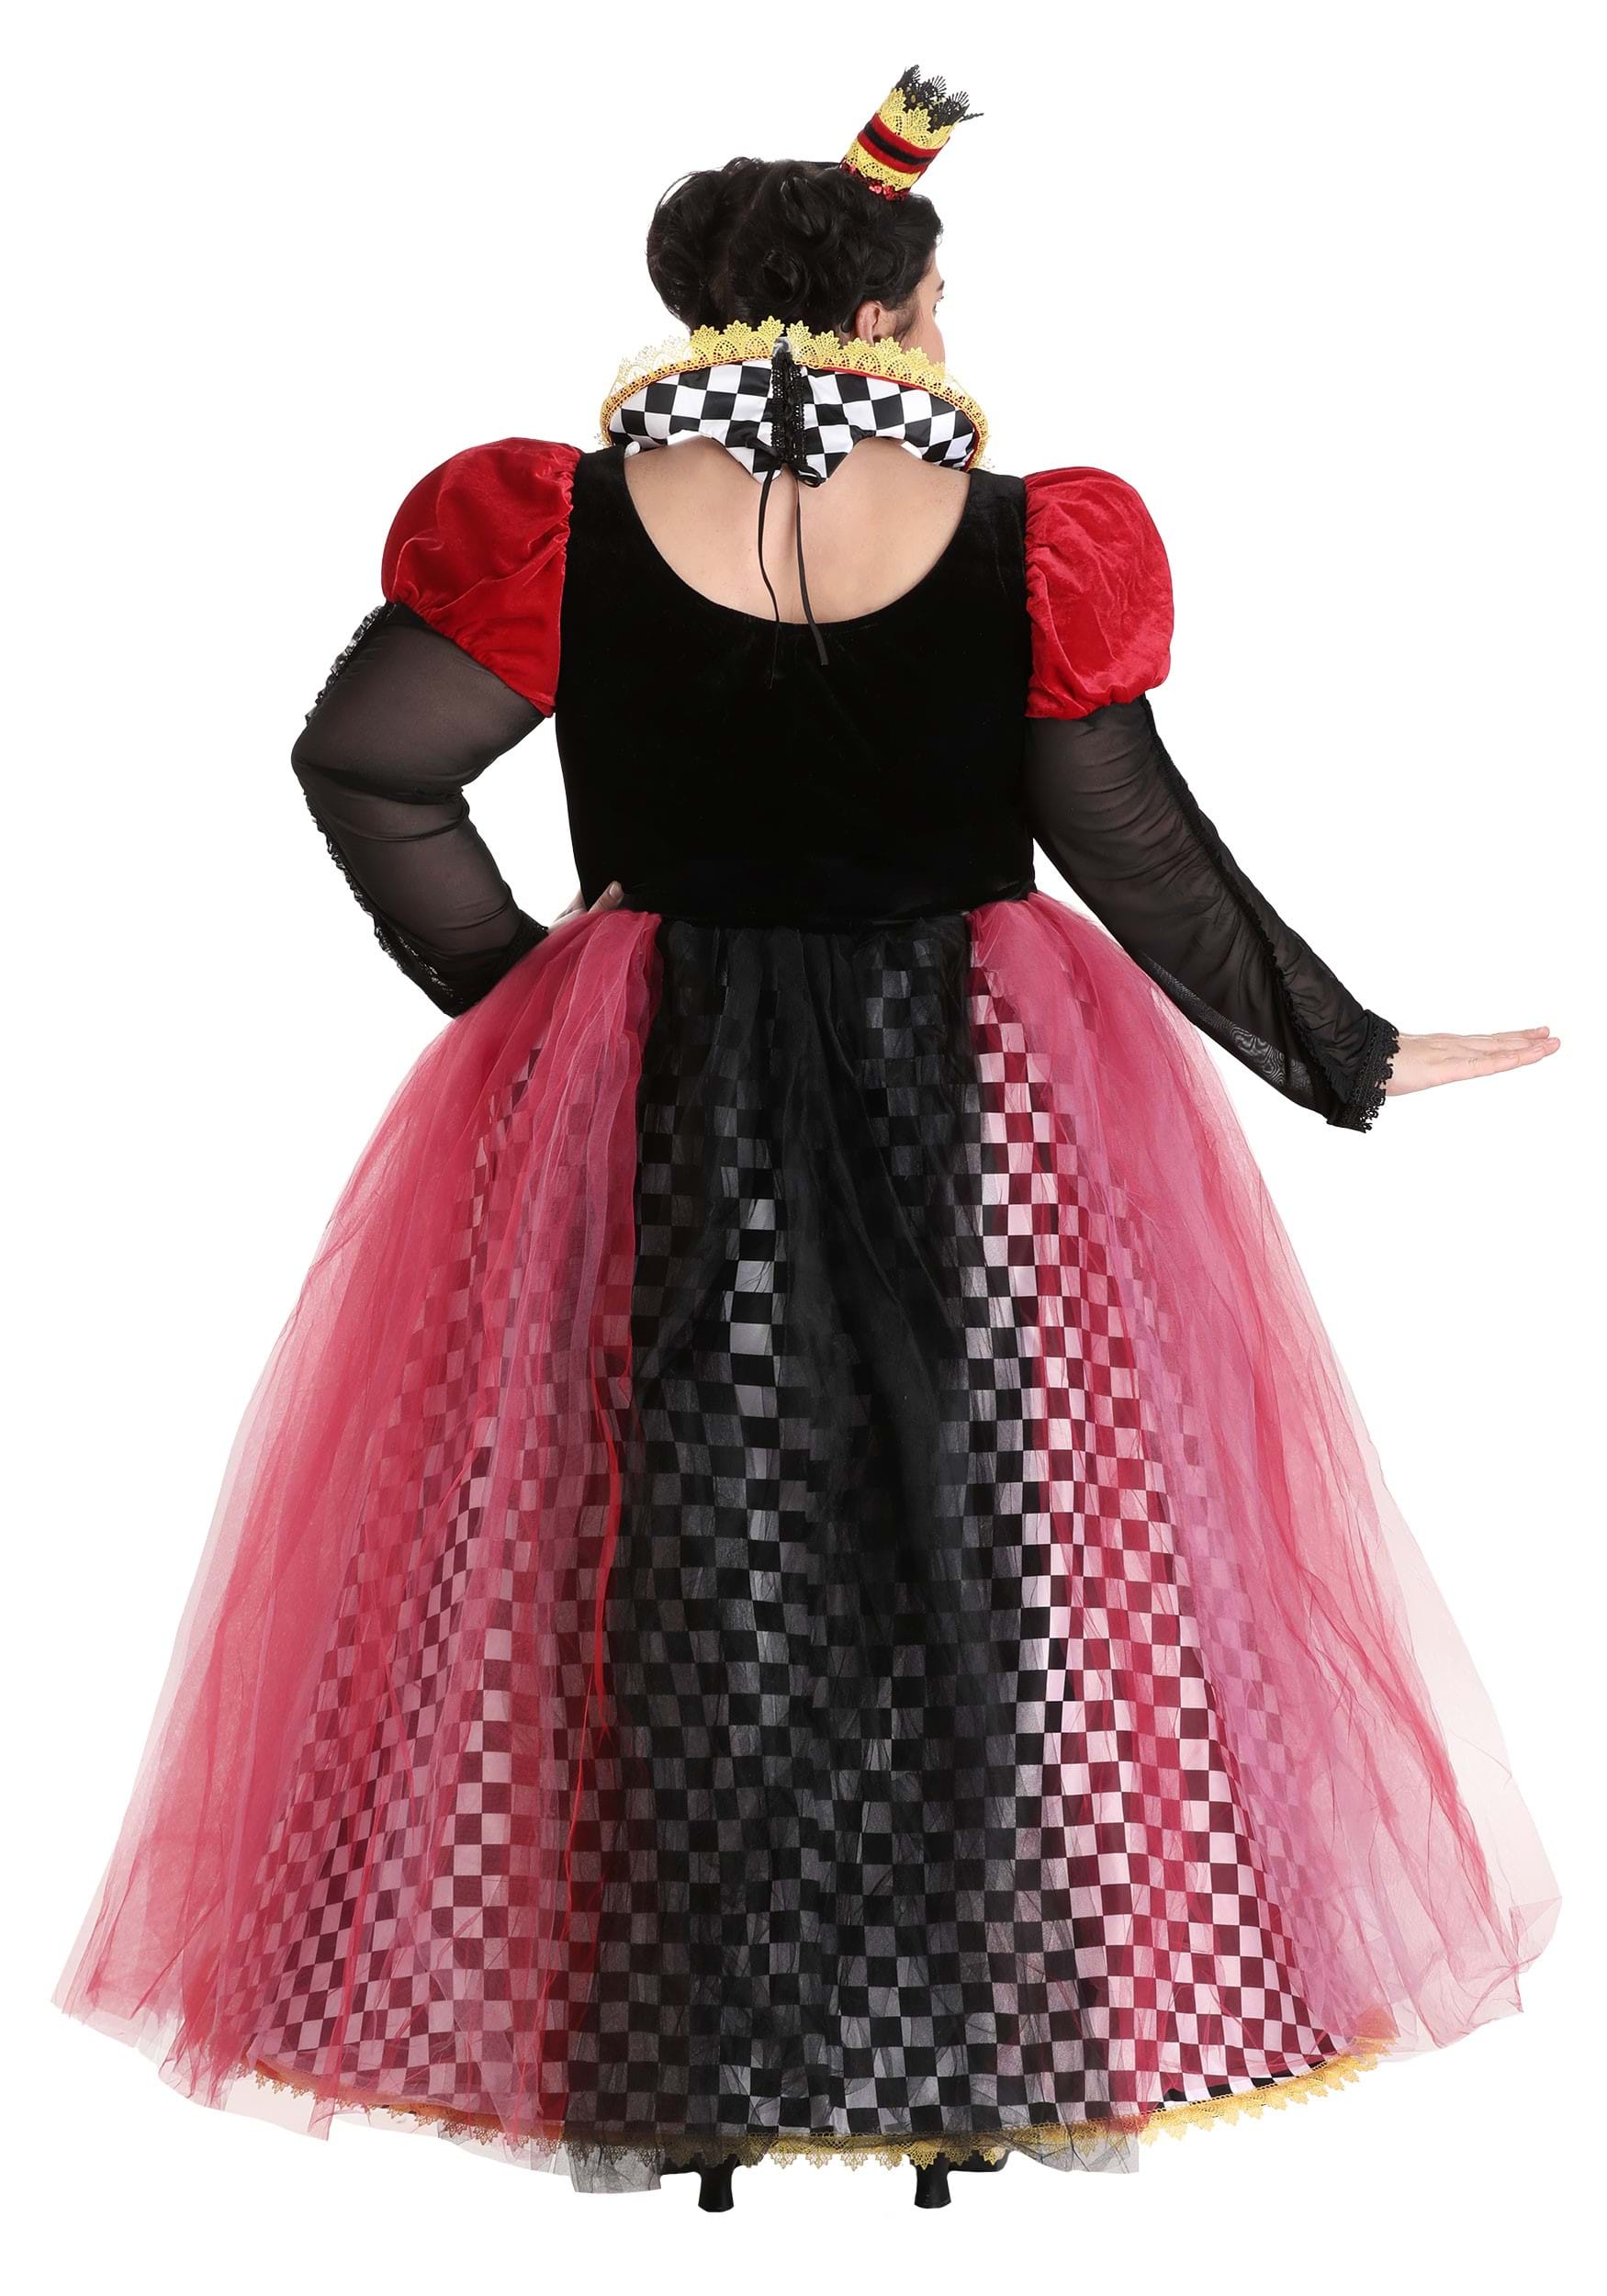 Ravishing Queen Of Hearts Fancy Dress Costume For Plus Size Women